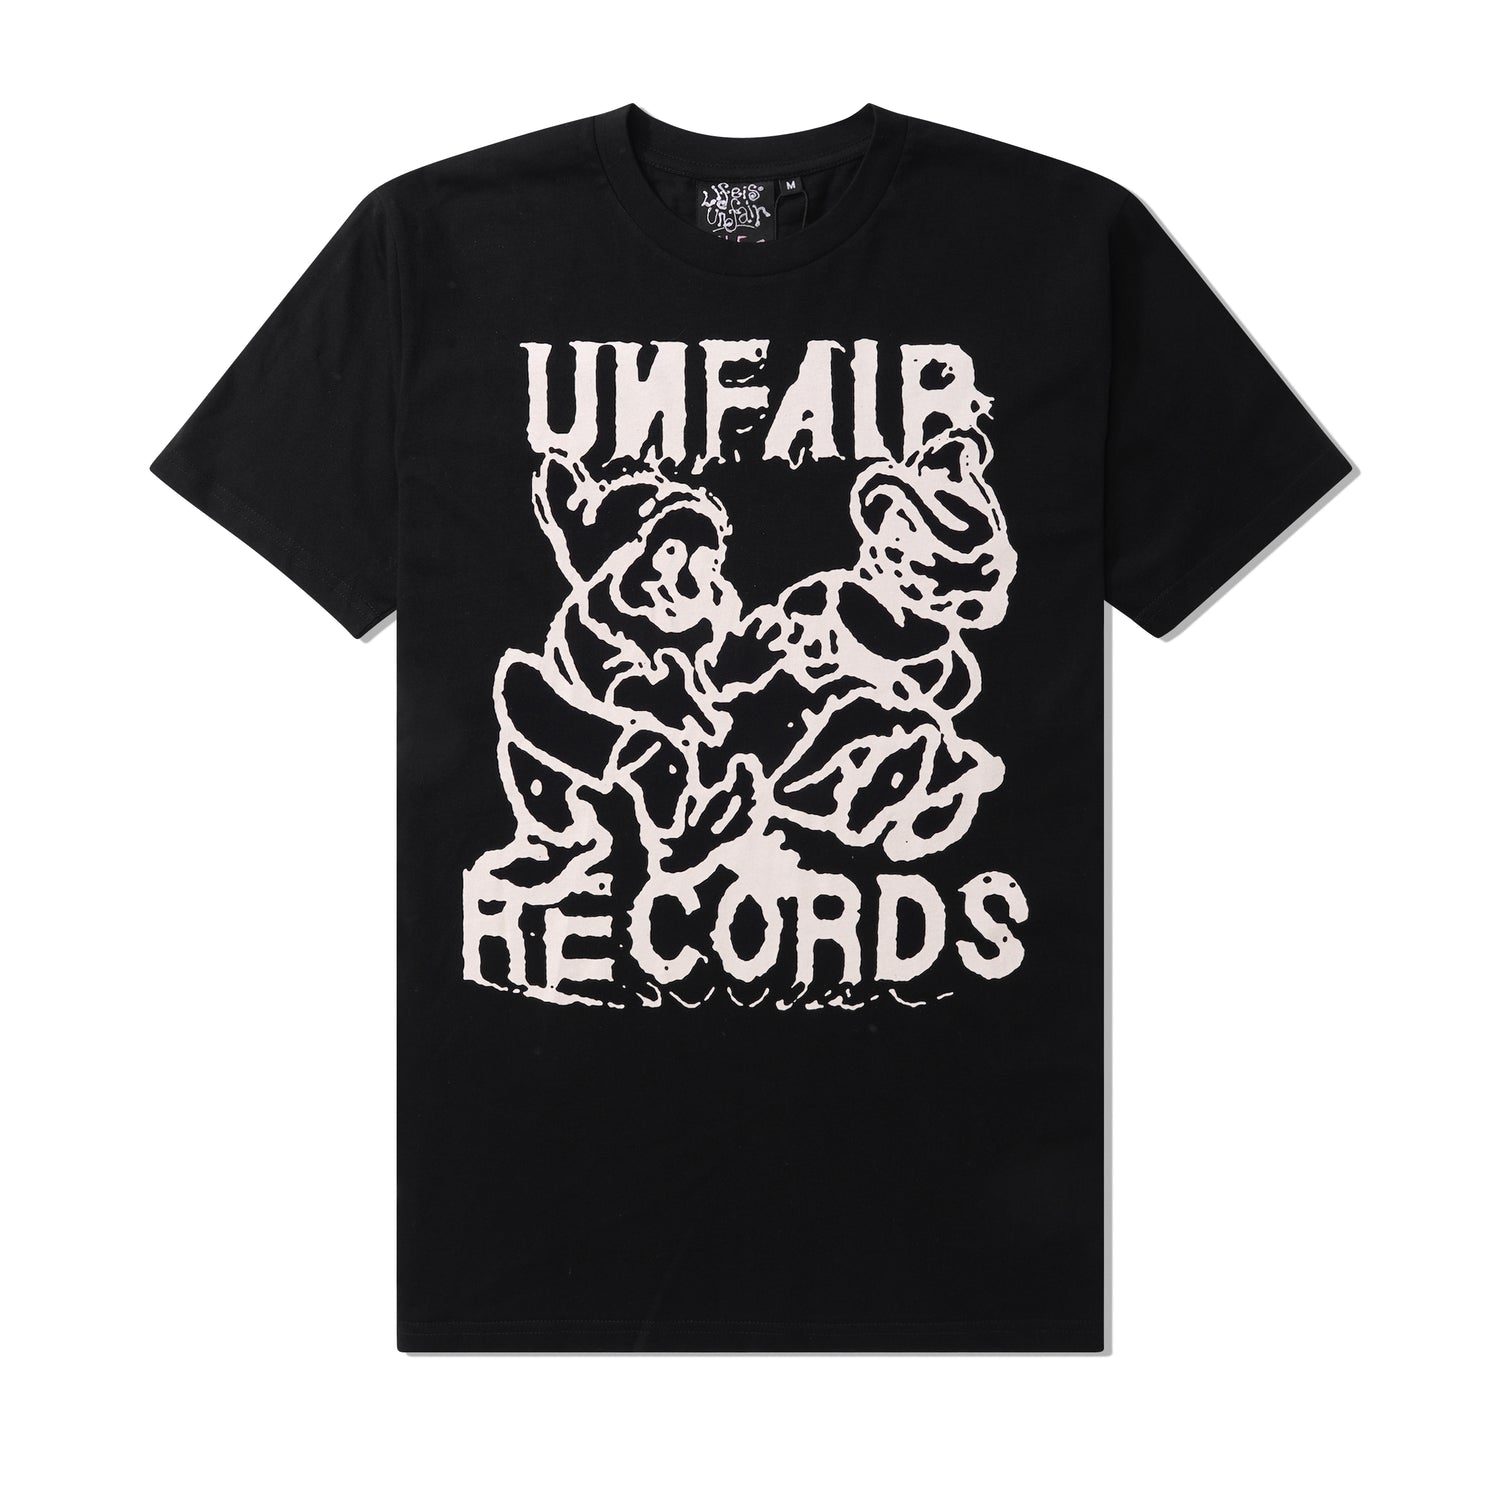 Unfair Records Tee, Black